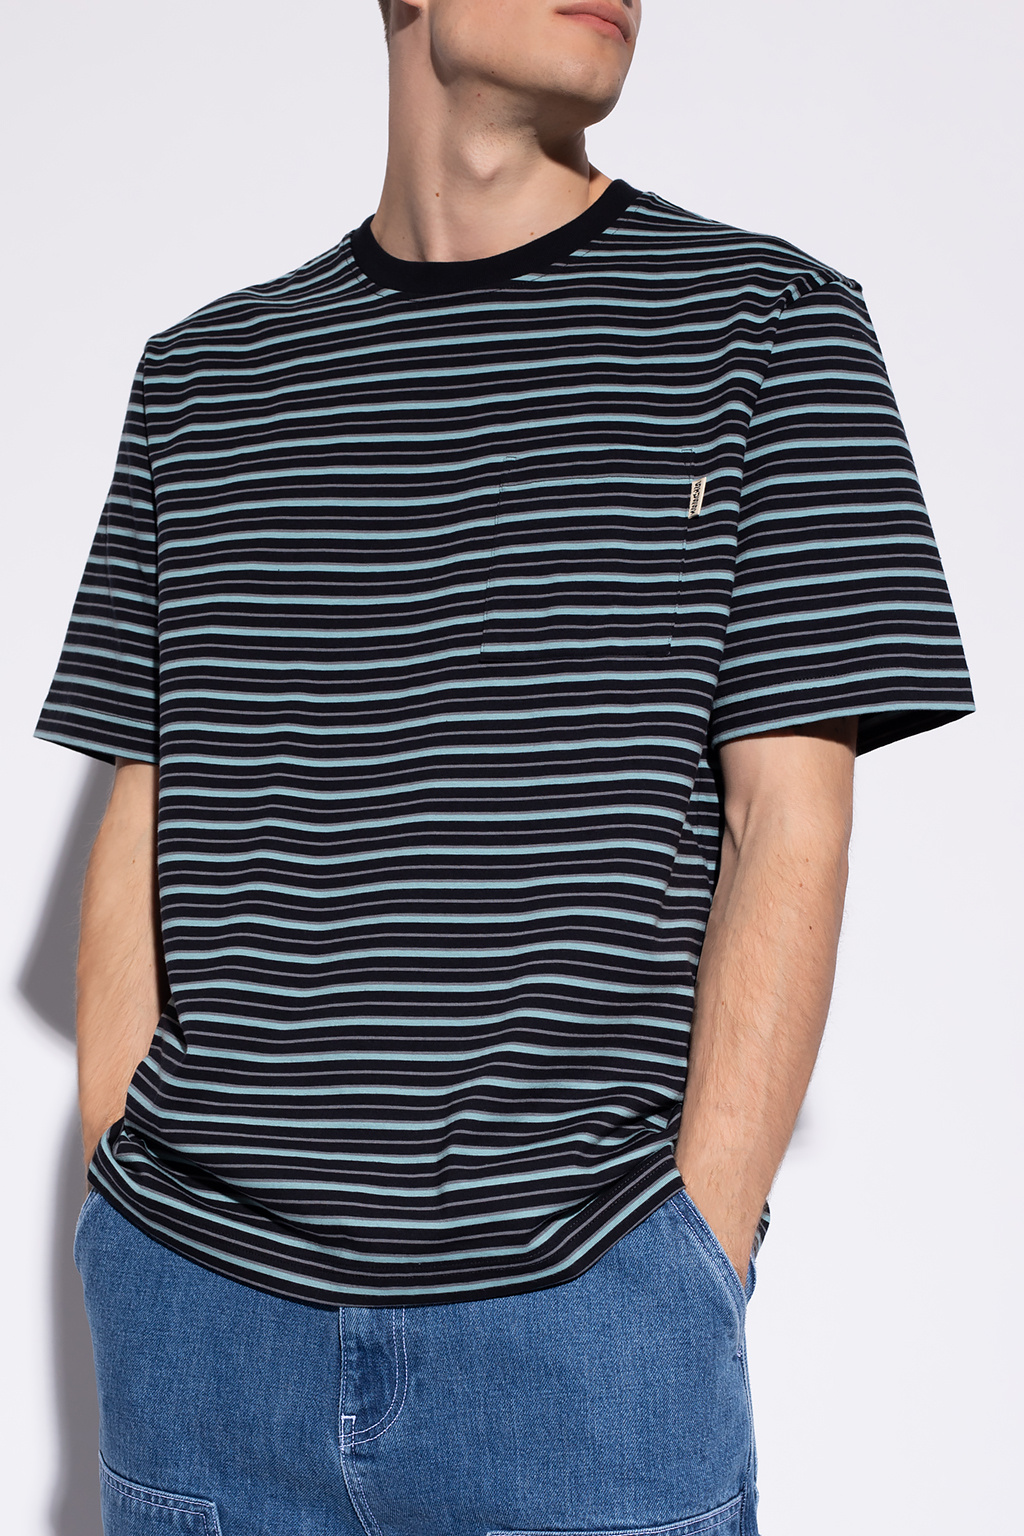 Stussy Striped T-shirt